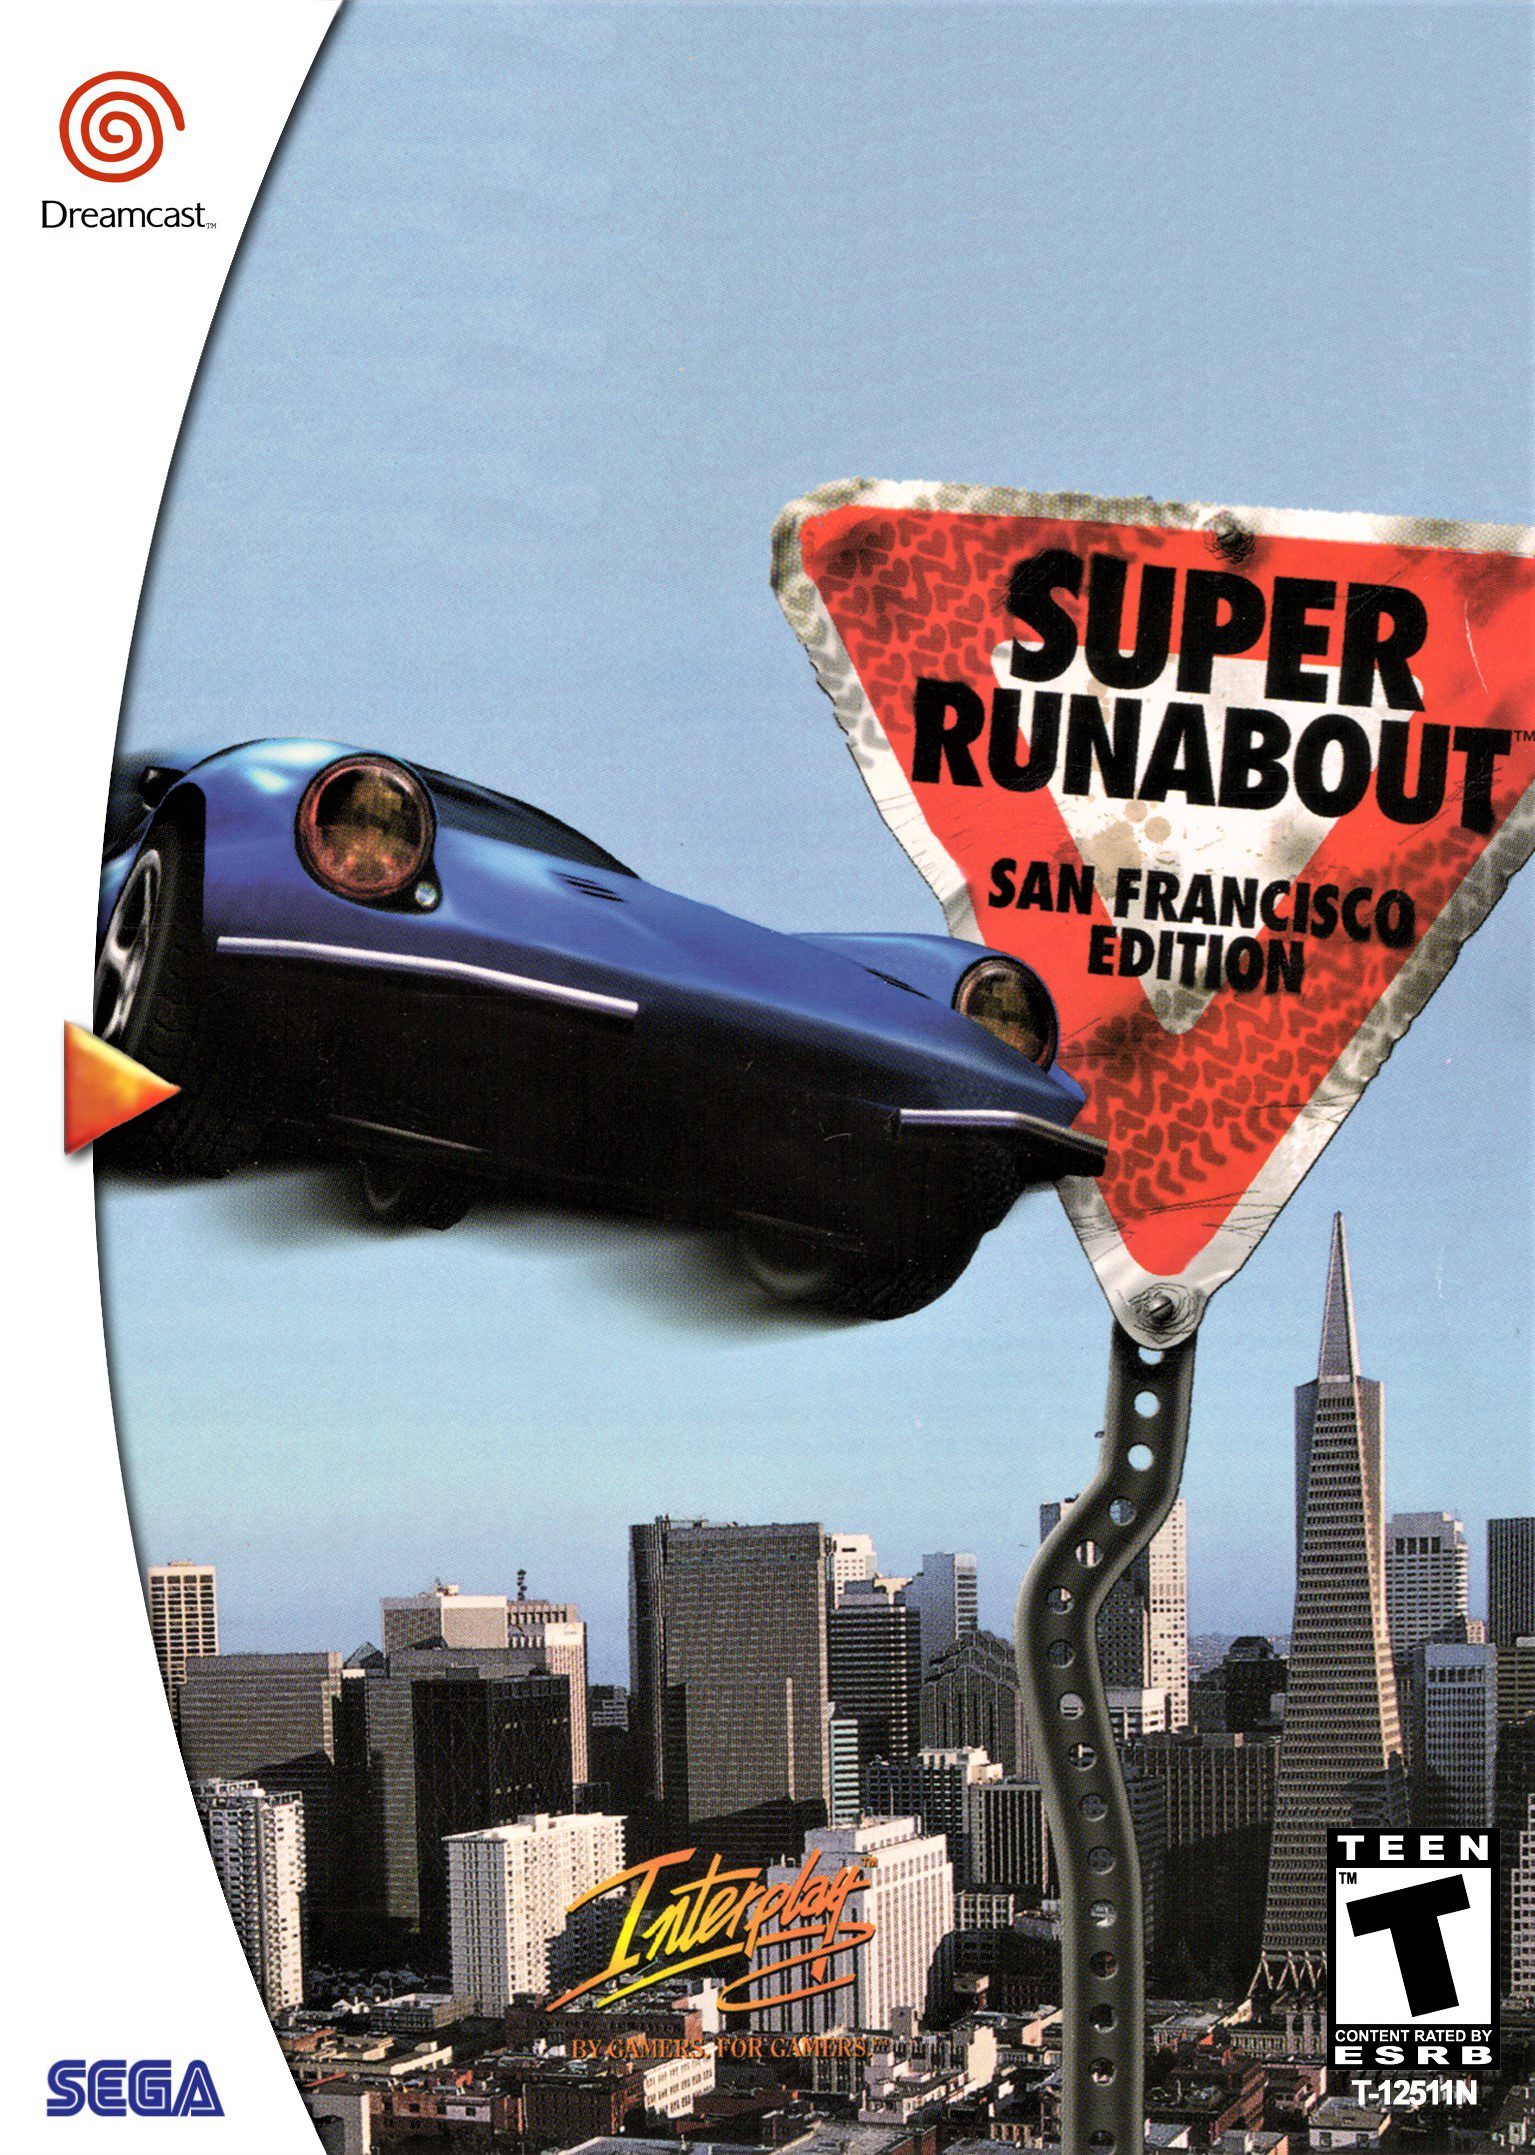 Super Runabout (San Francisco Edition) for Sega Dreamcast